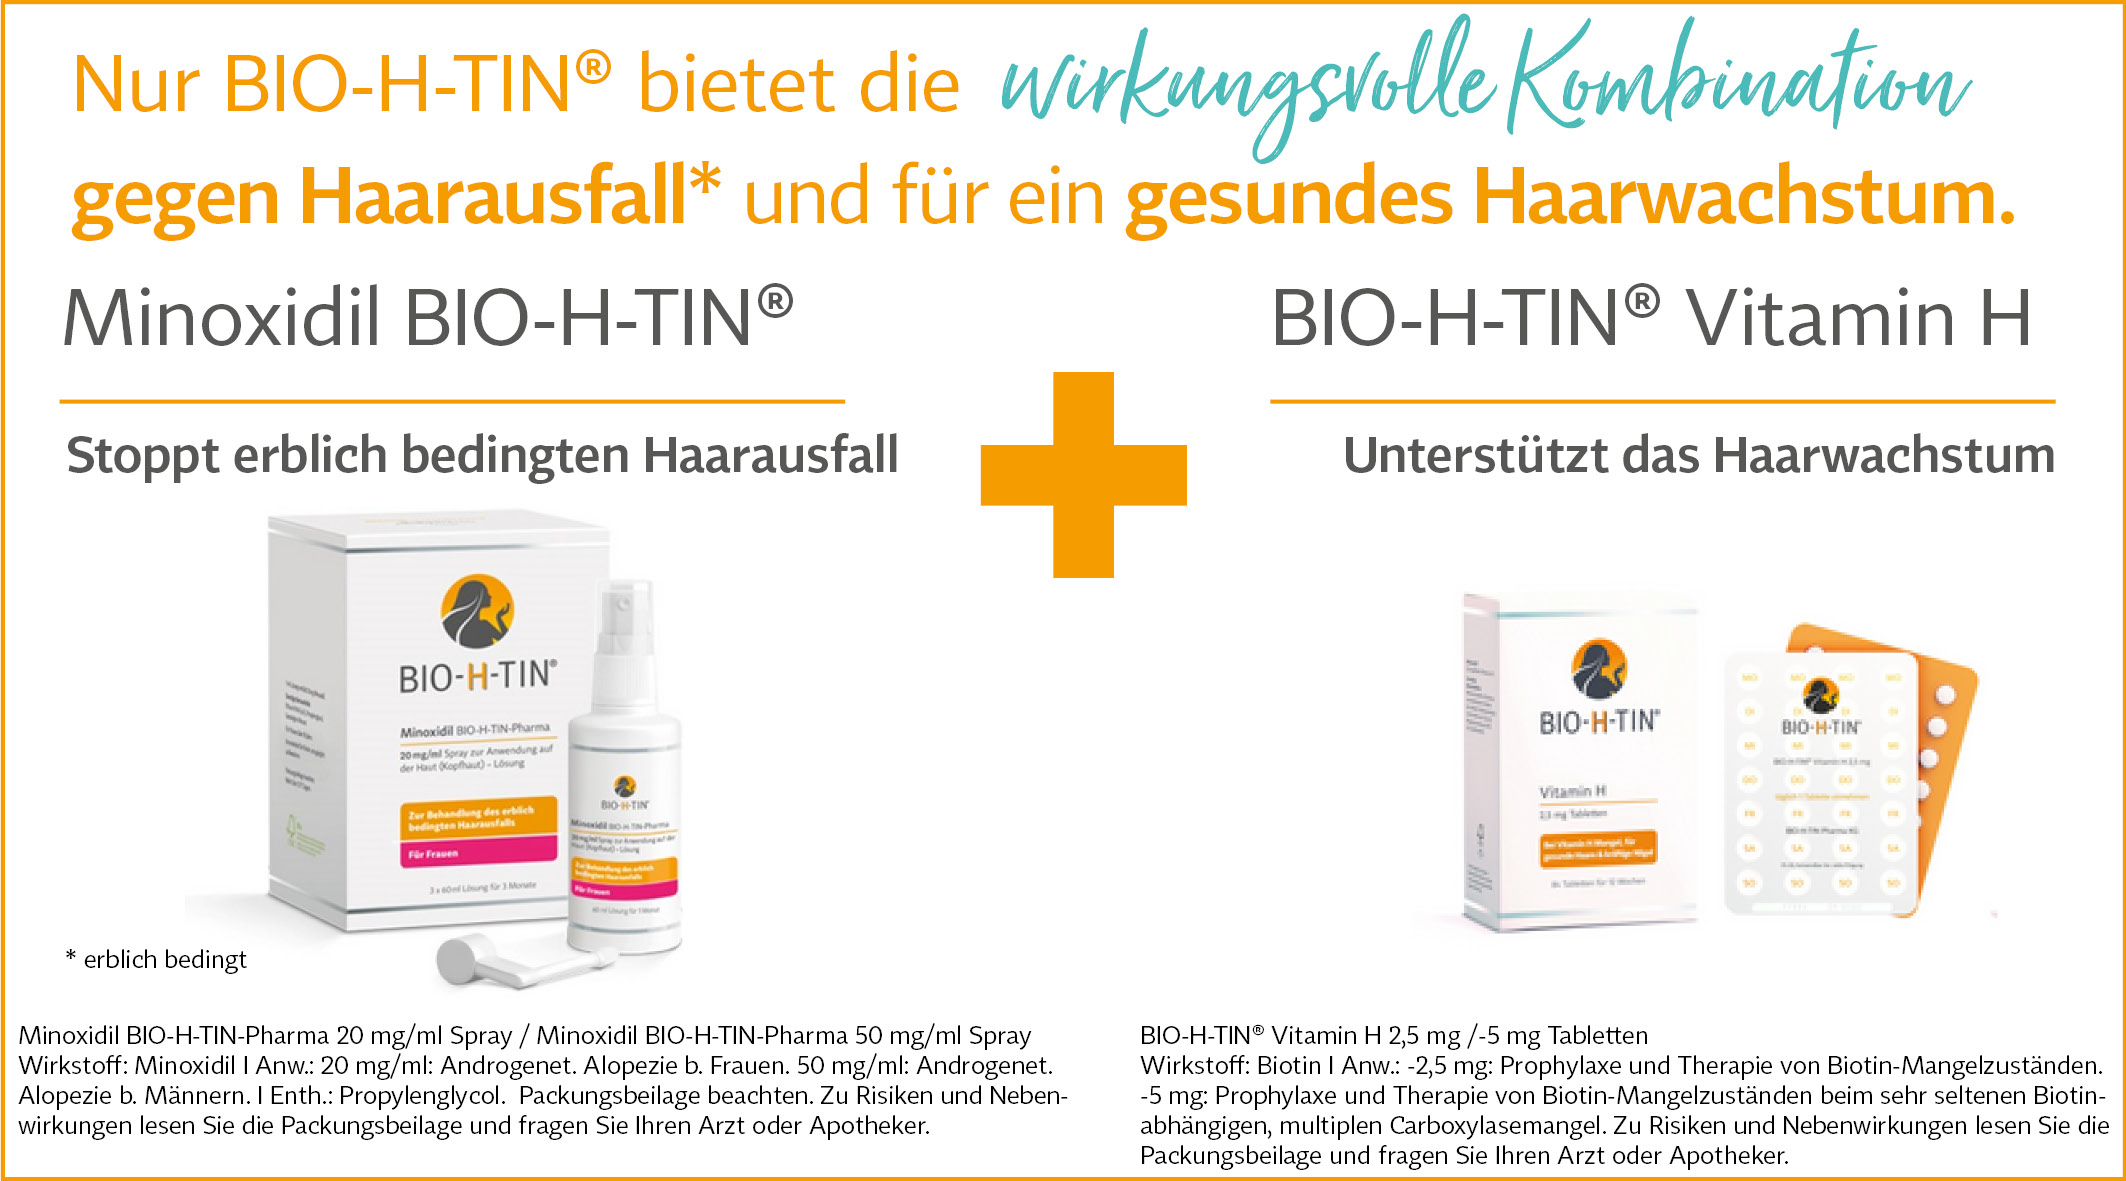 MINOXIDIL BIO-H-TIN Pharma 20 mg/ml Spray Frauen (3X60 ml) -  medikamente-per-klick.de